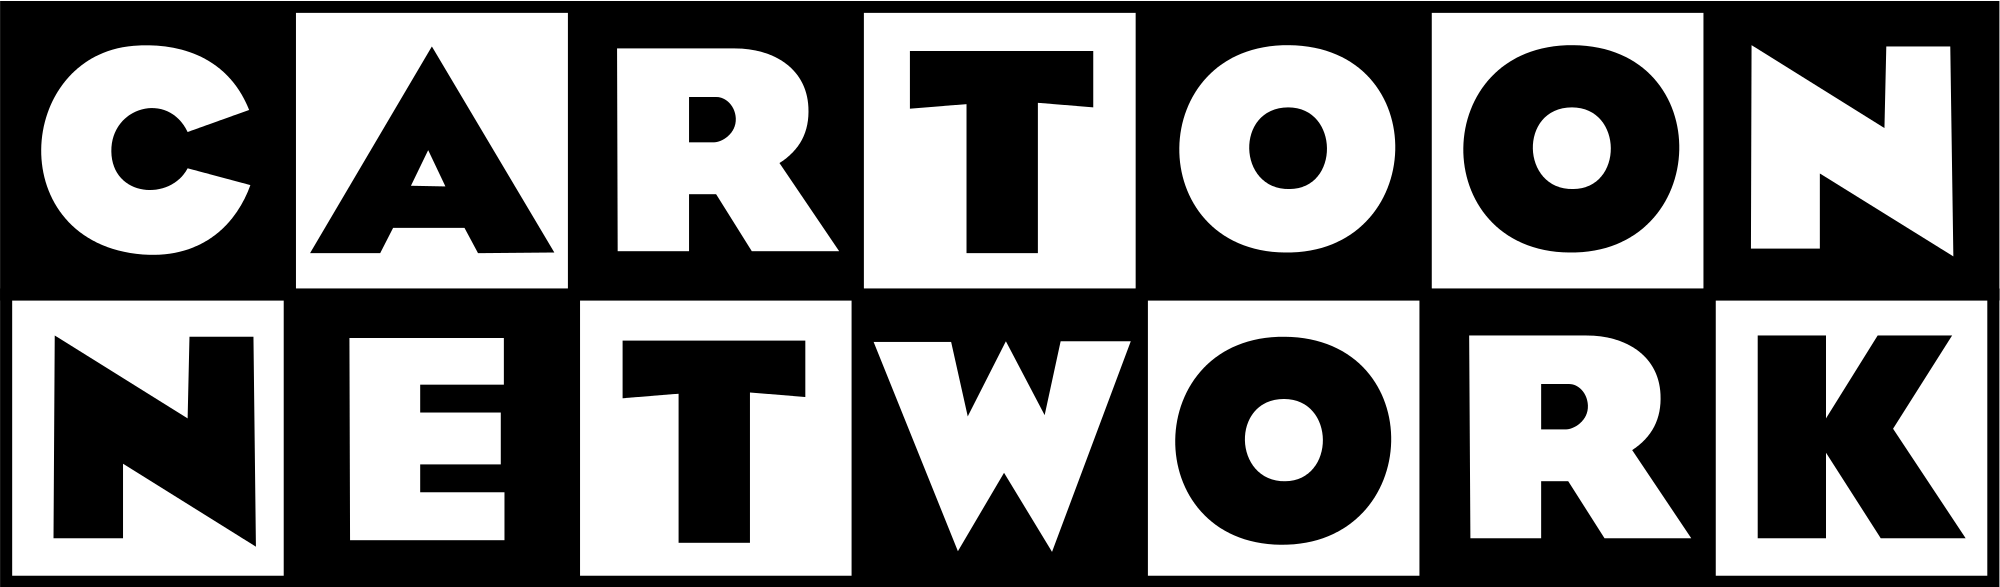 Cartoon Network 2017 Logo - Image - Original Cartoon Network logo.png | Dream Logos Wiki ...